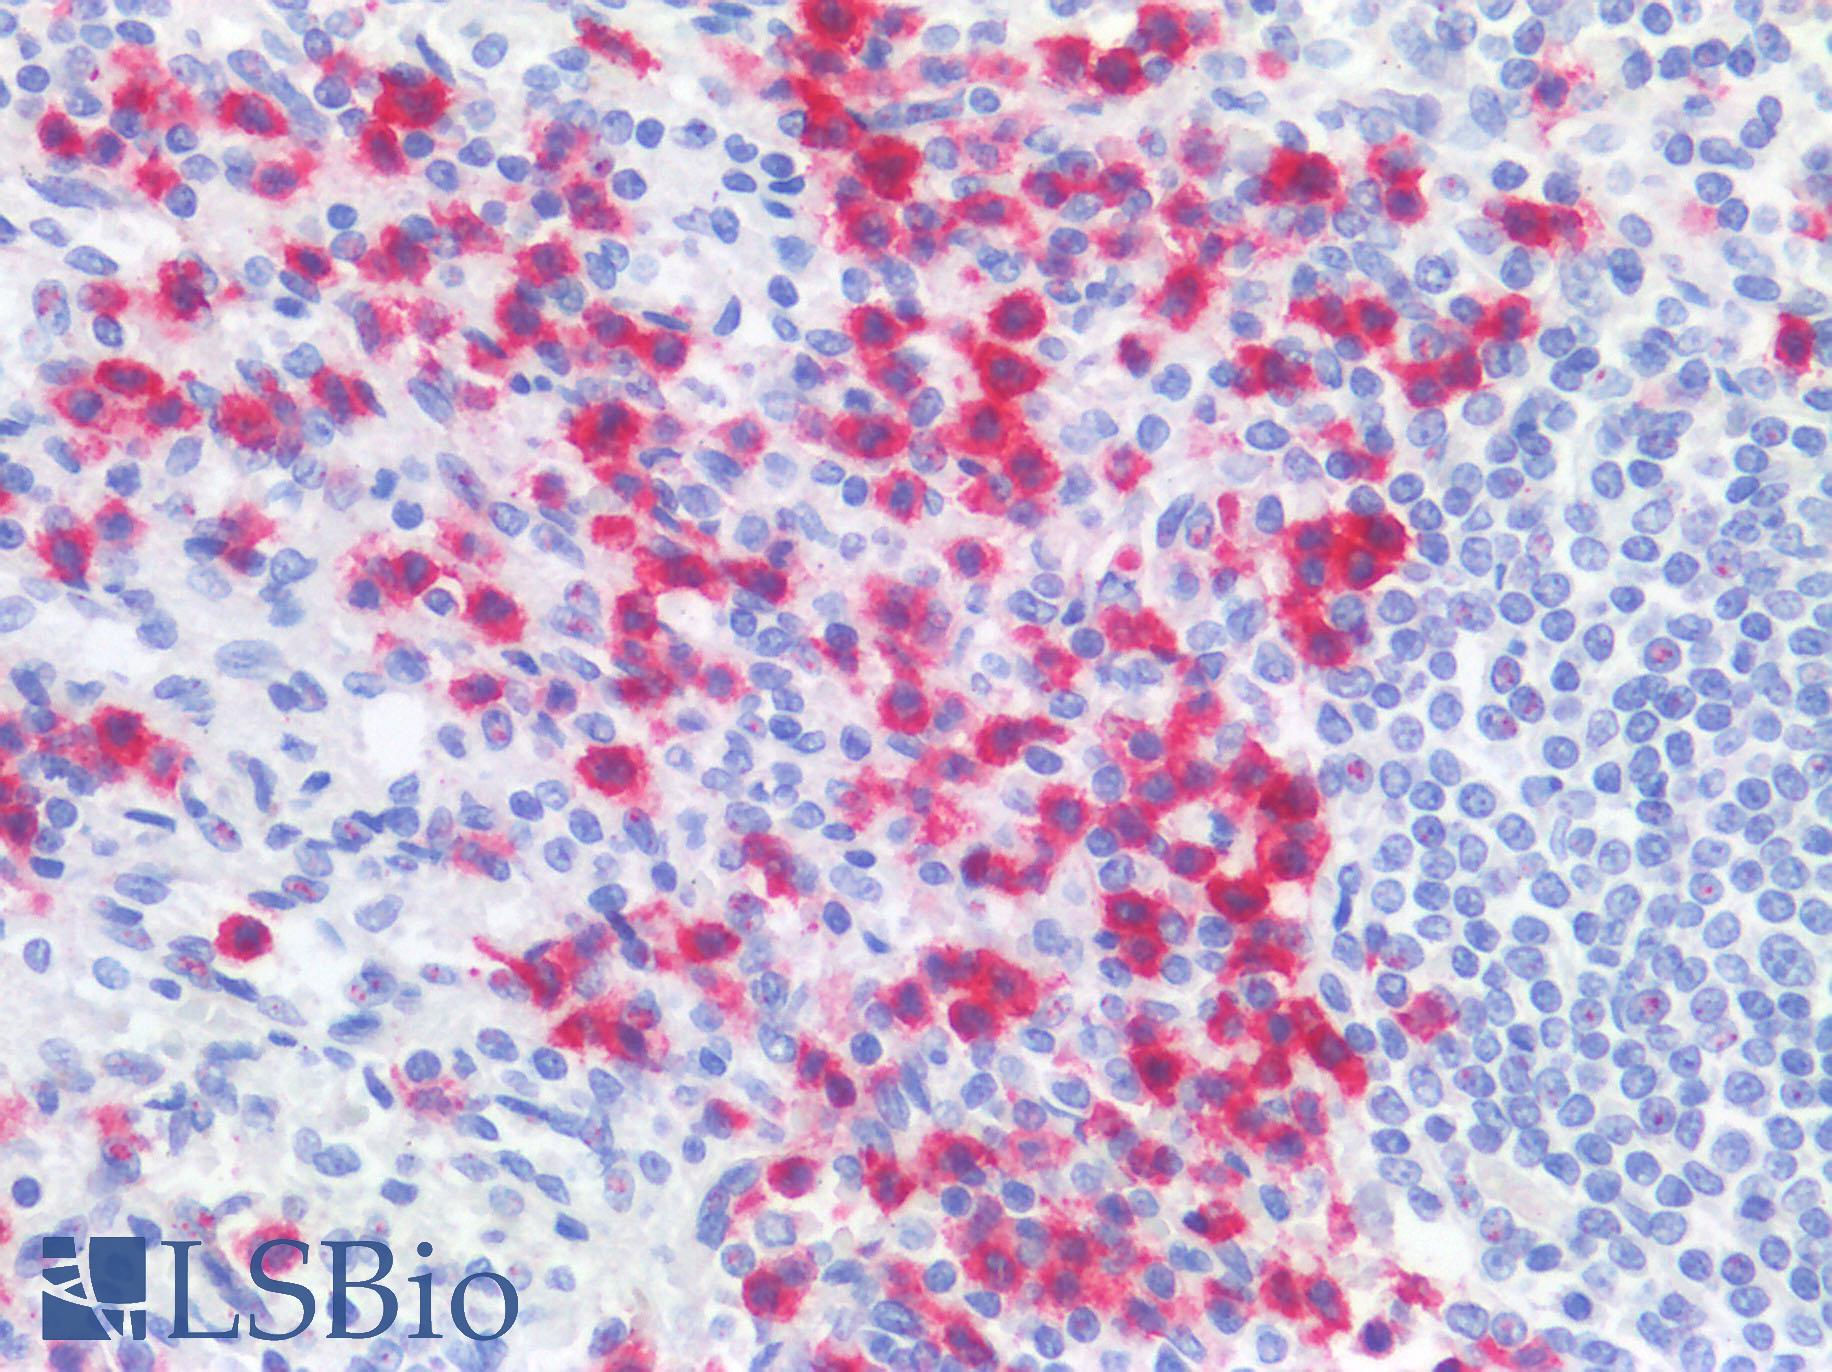 CD177 Antibody - Human Spleen: Formalin-Fixed, Paraffin-Embedded (FFPE)